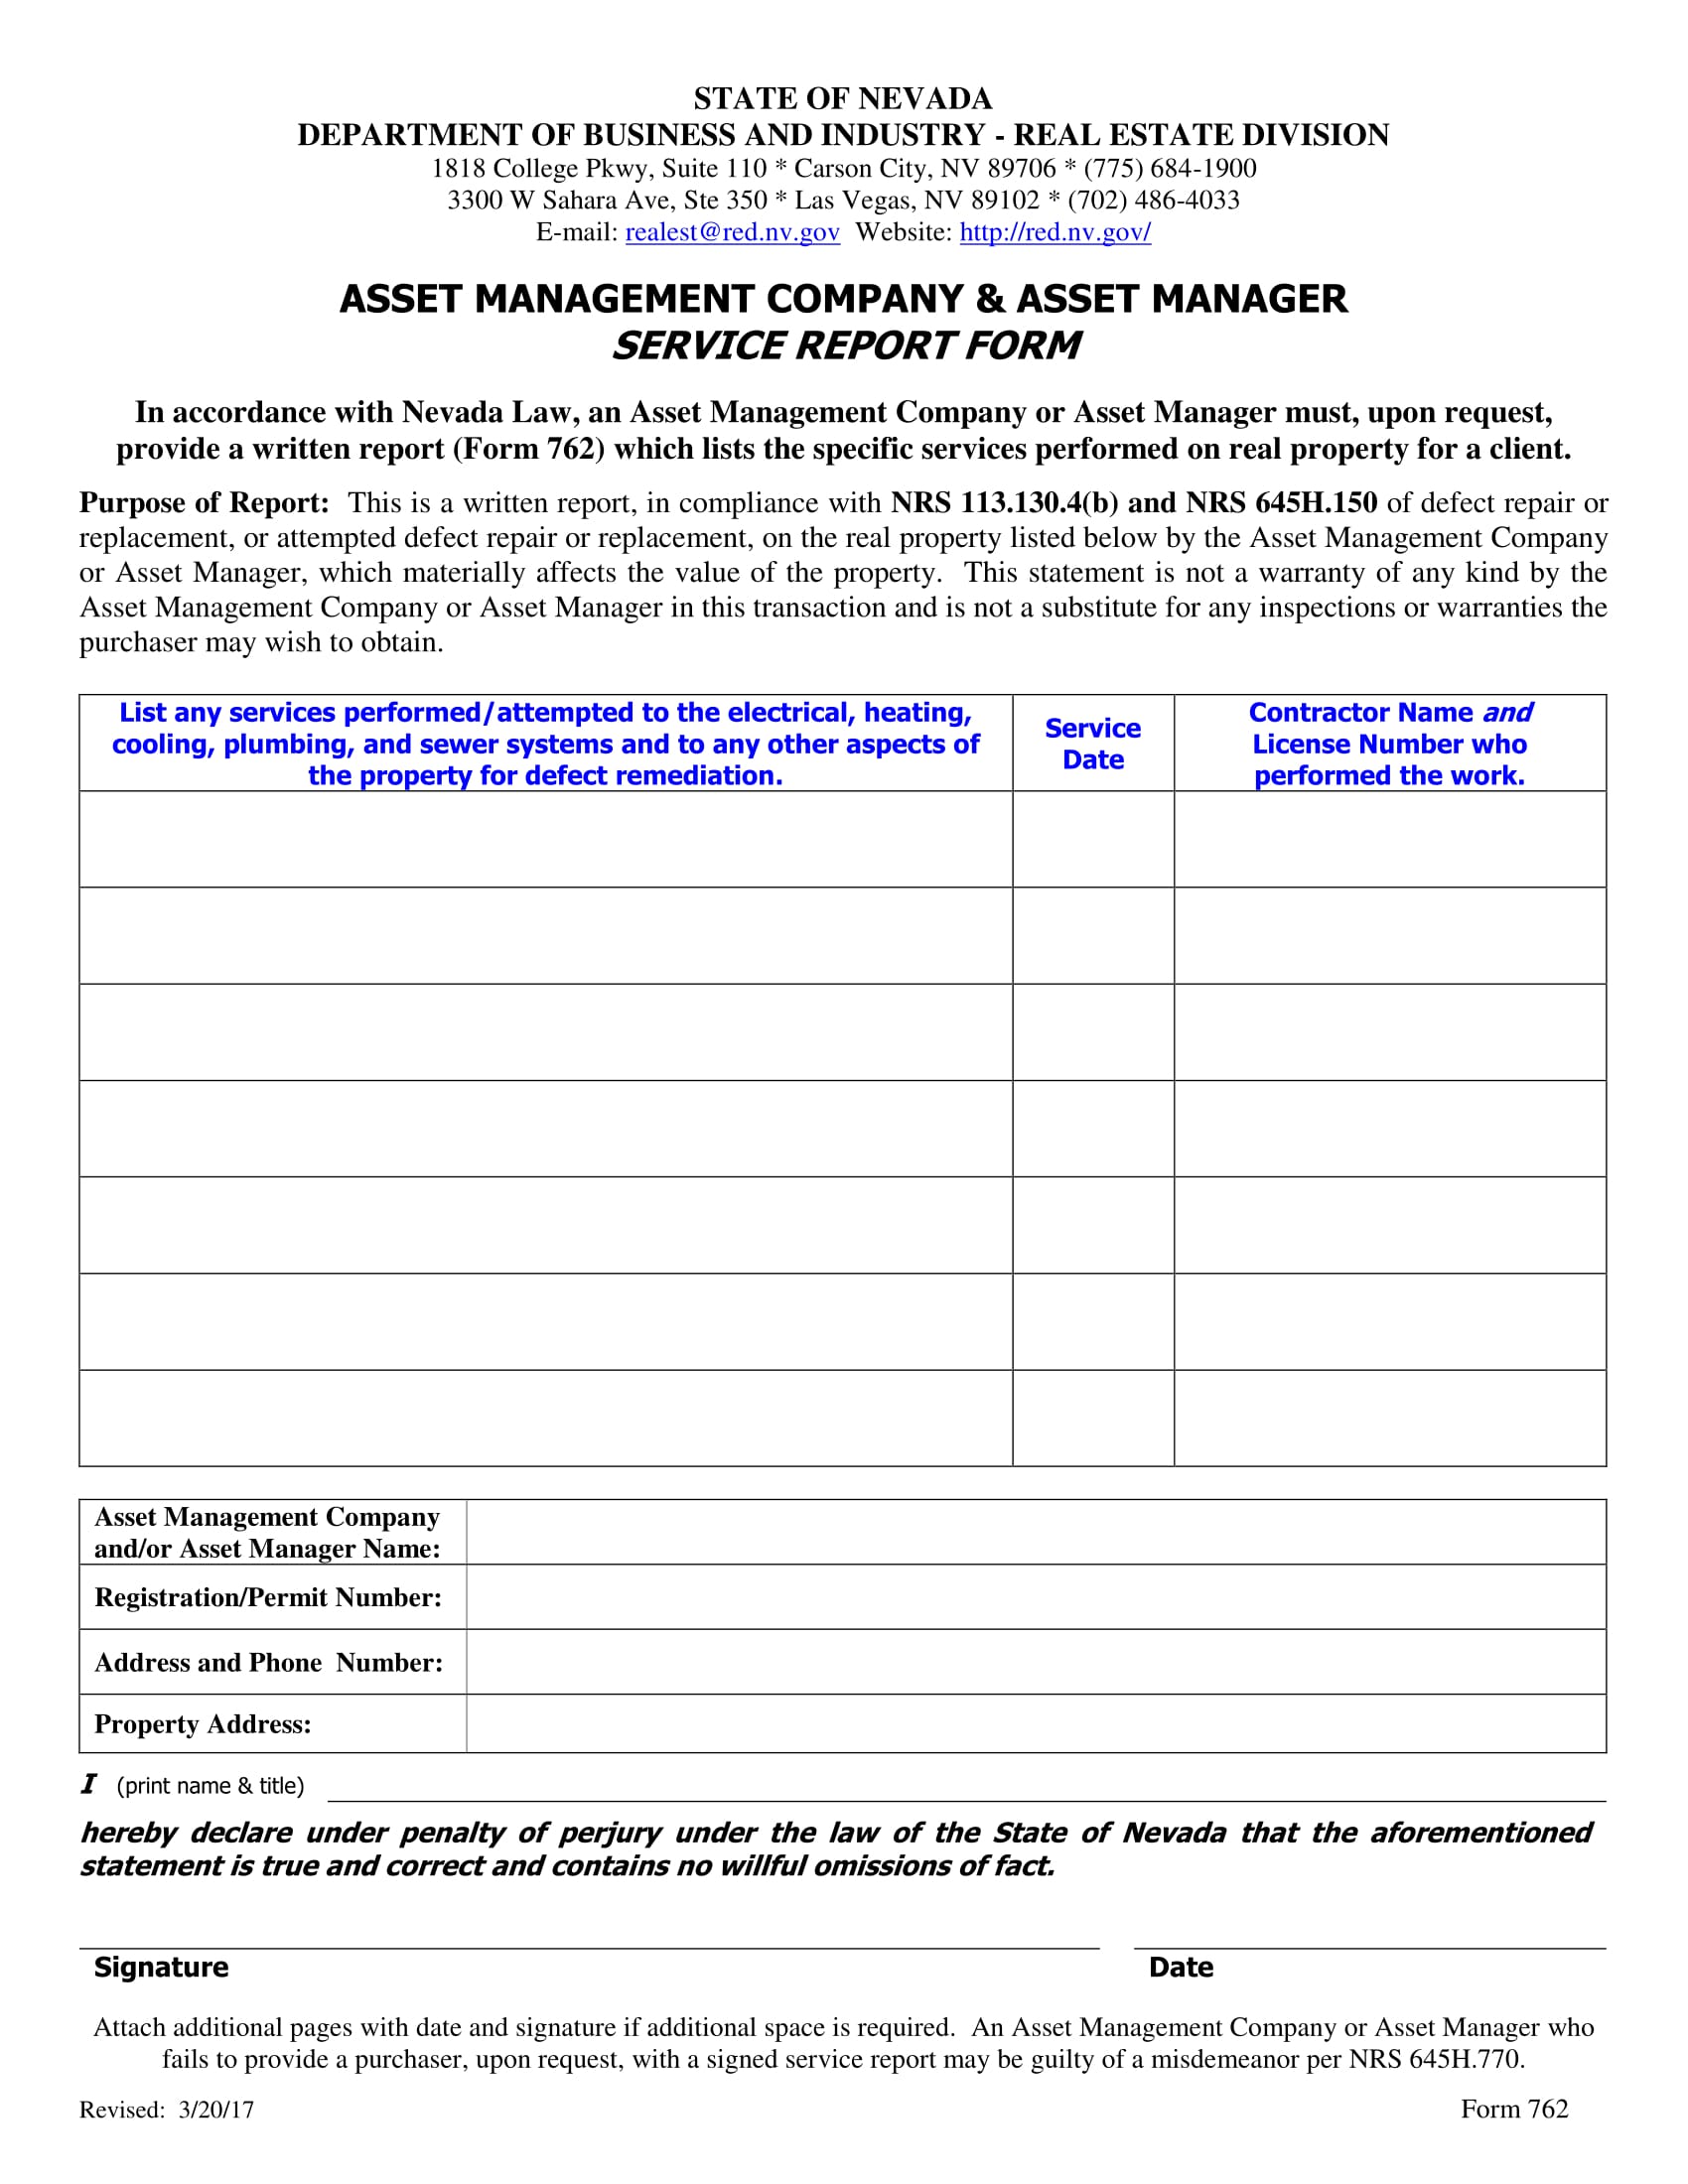 asset management service report form 1